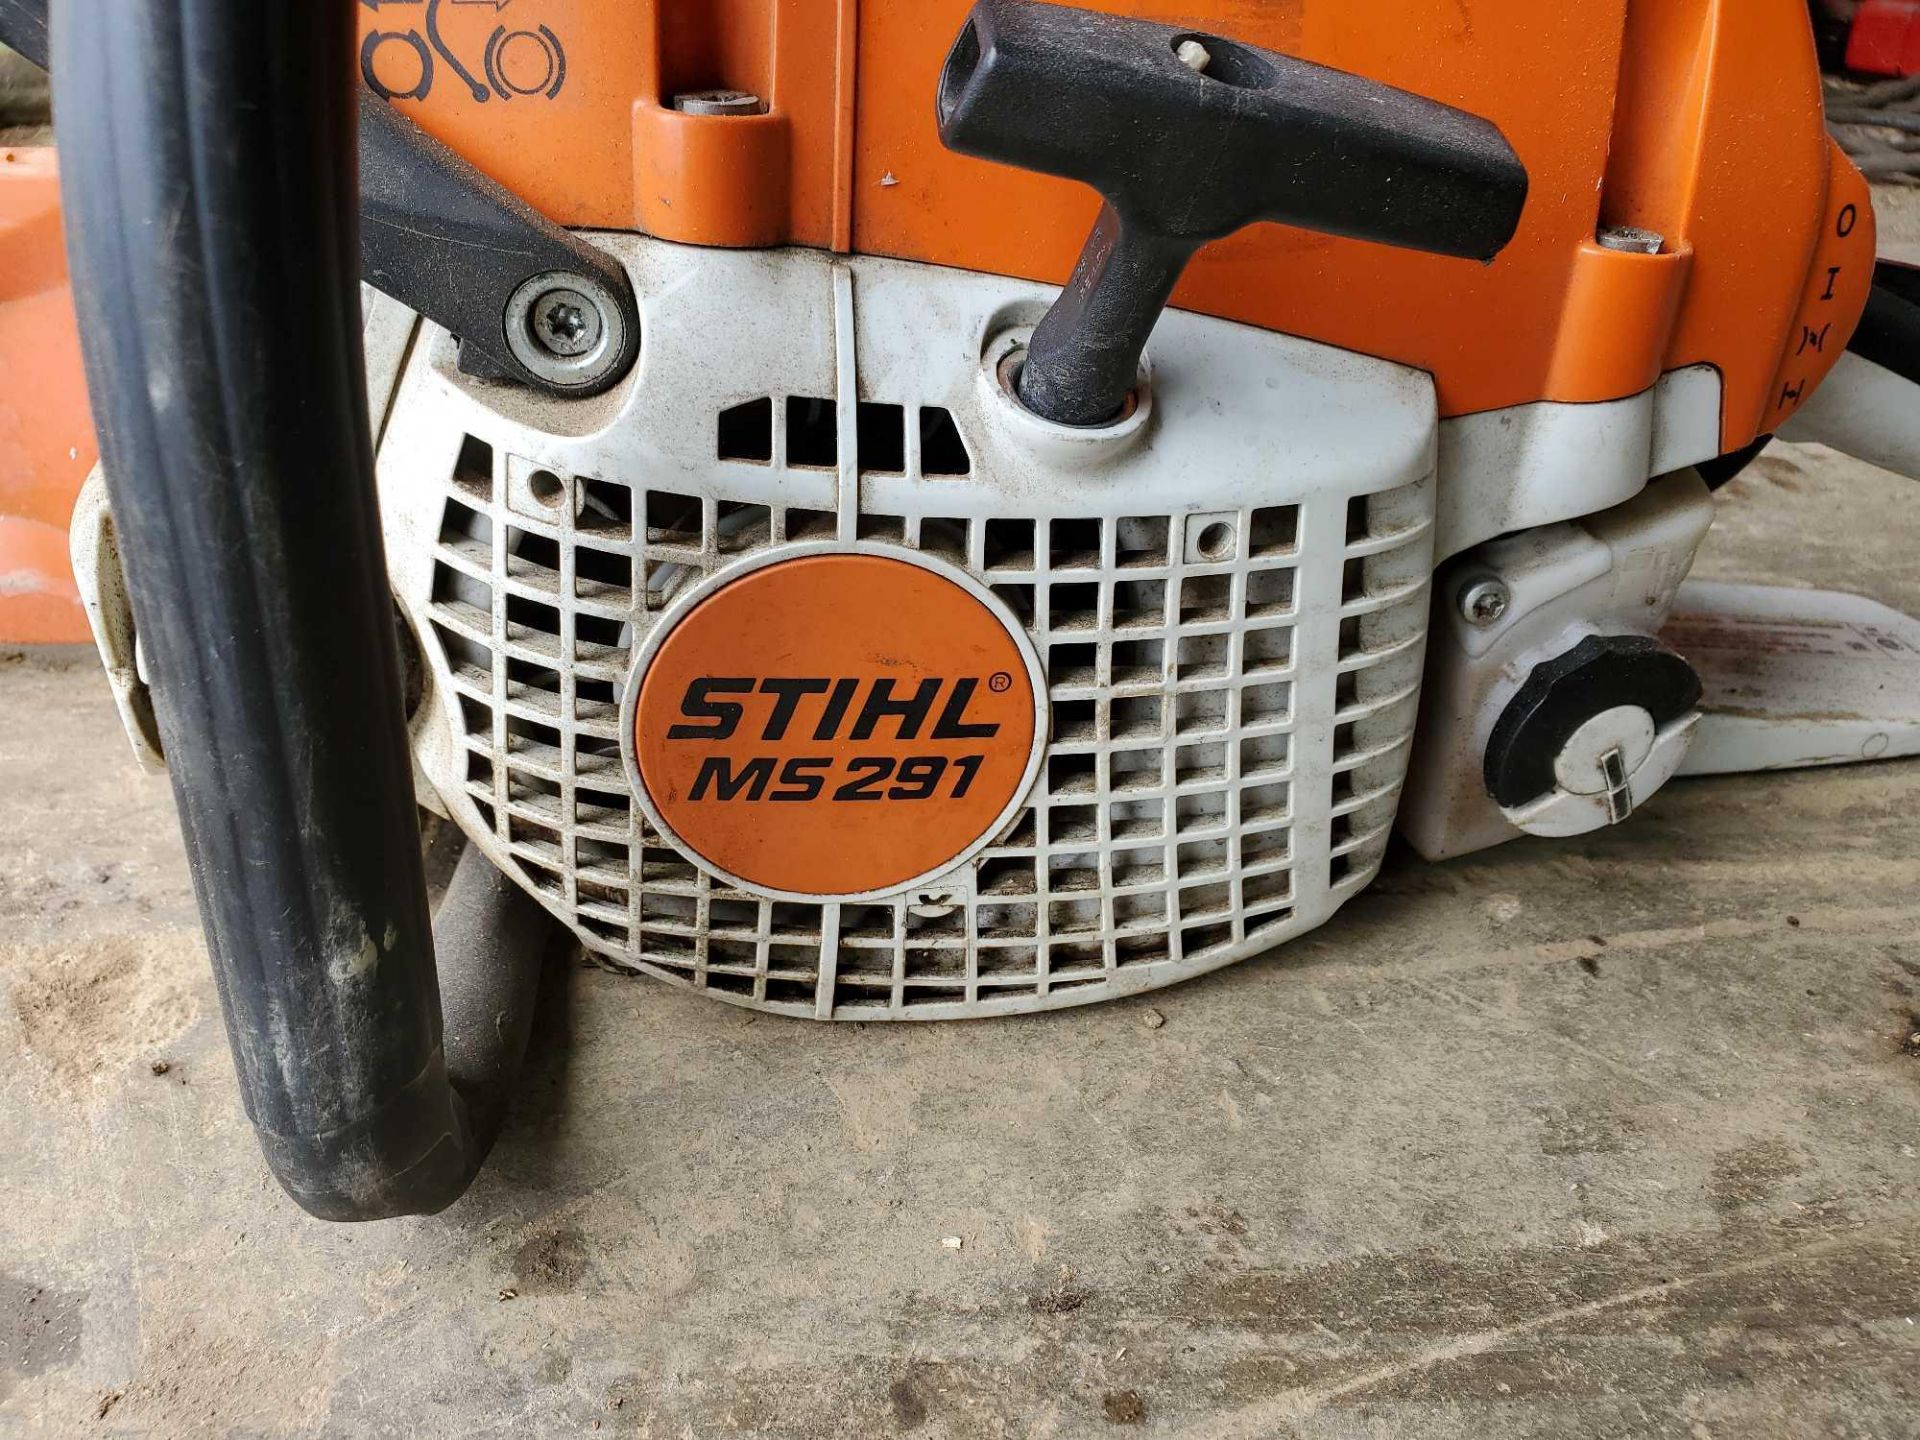 stihl ms 291 chainsaw - Image 2 of 2